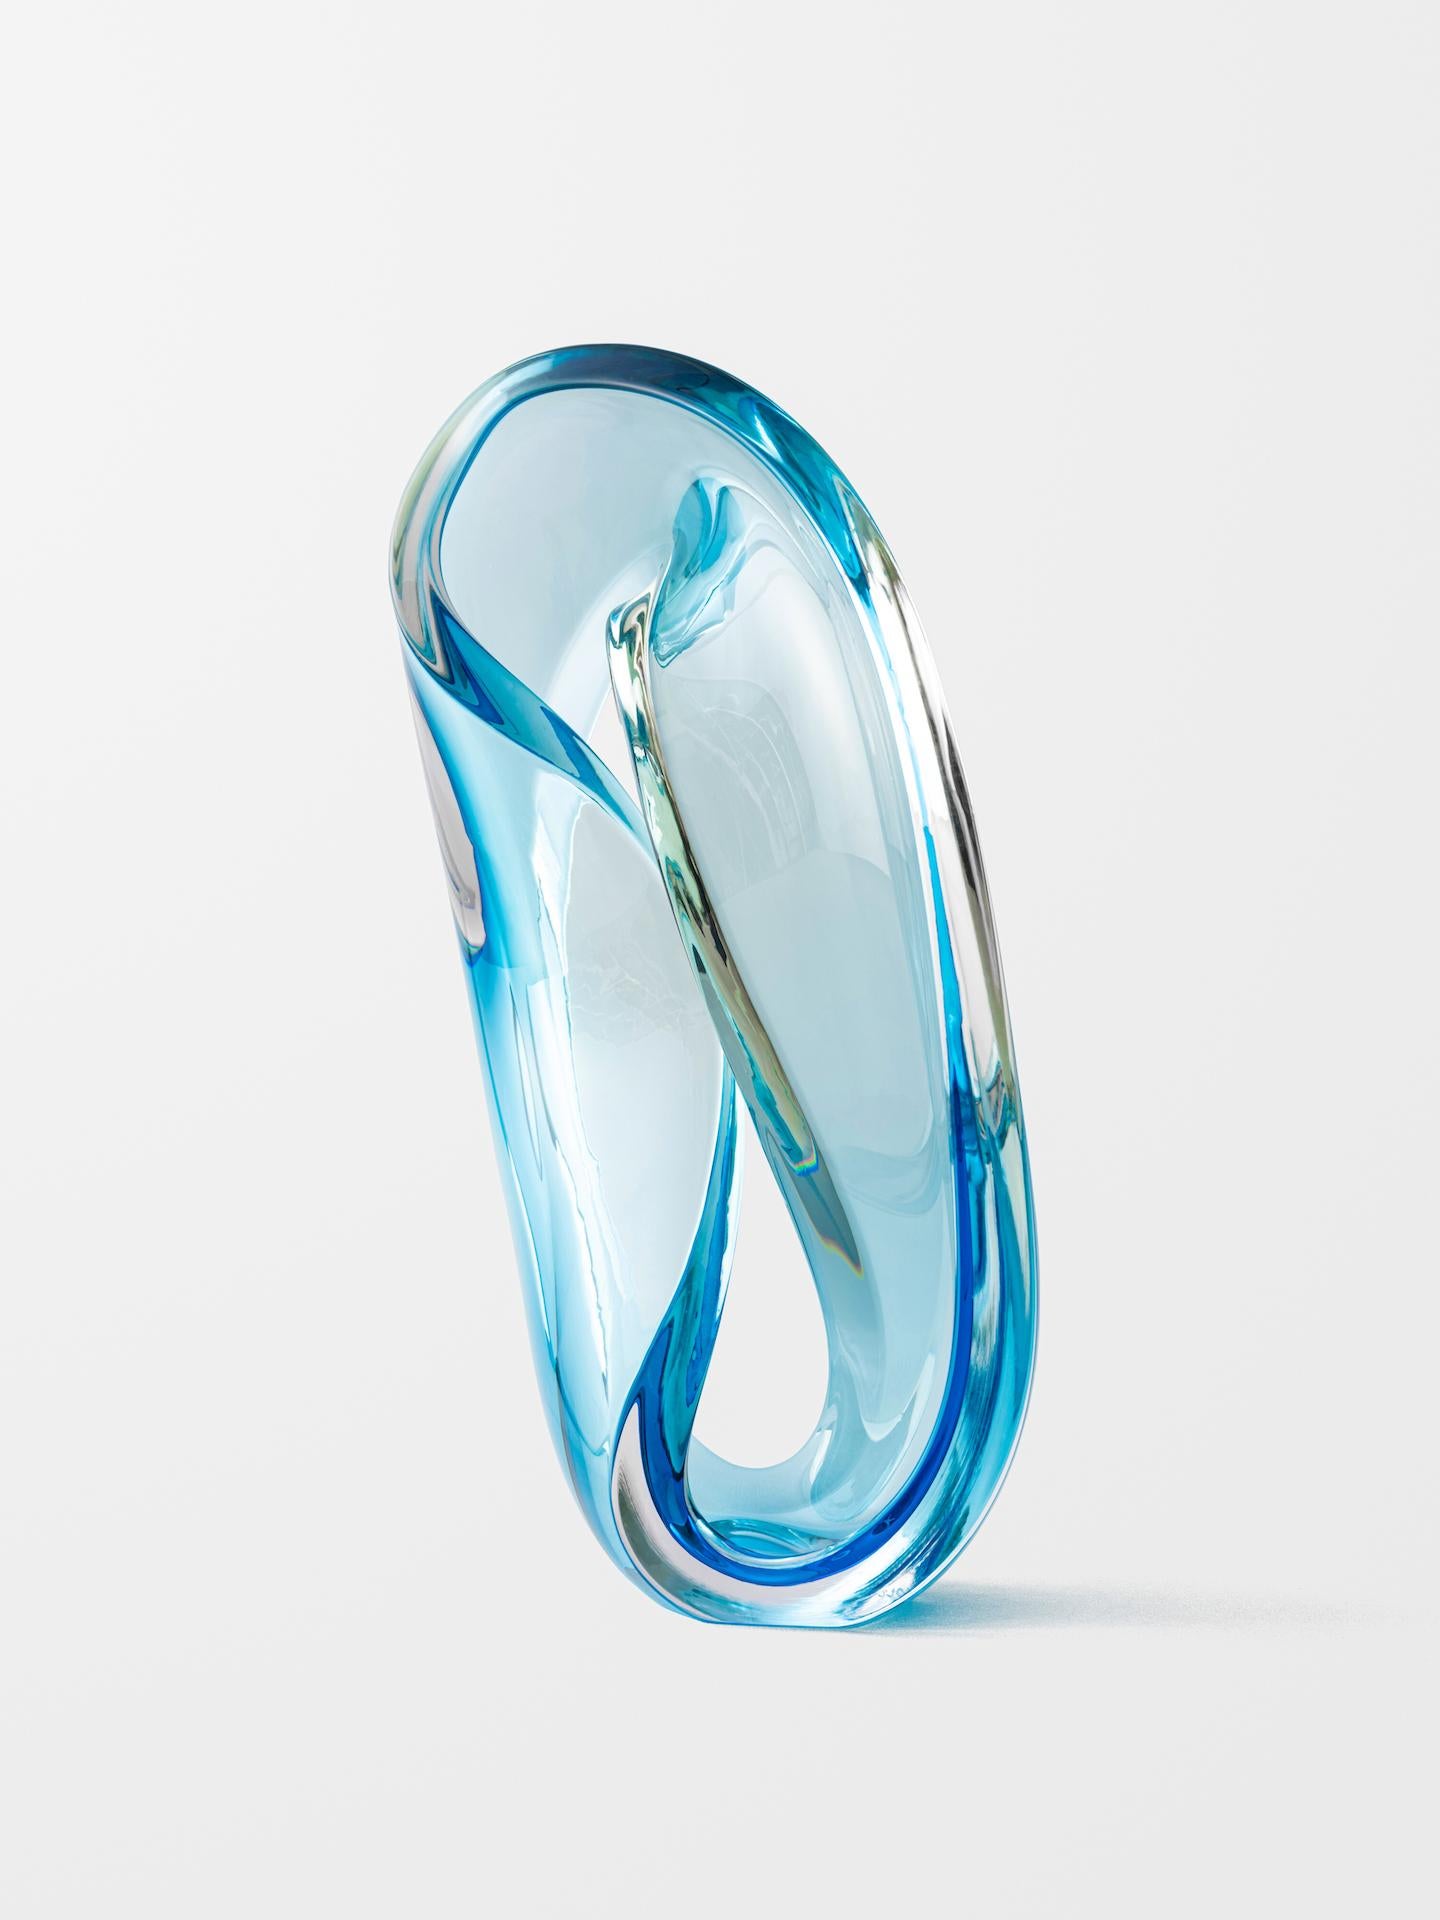 Loops (Sky Blue) - Contemporary Sculpture by Jonas Noël Niedermann